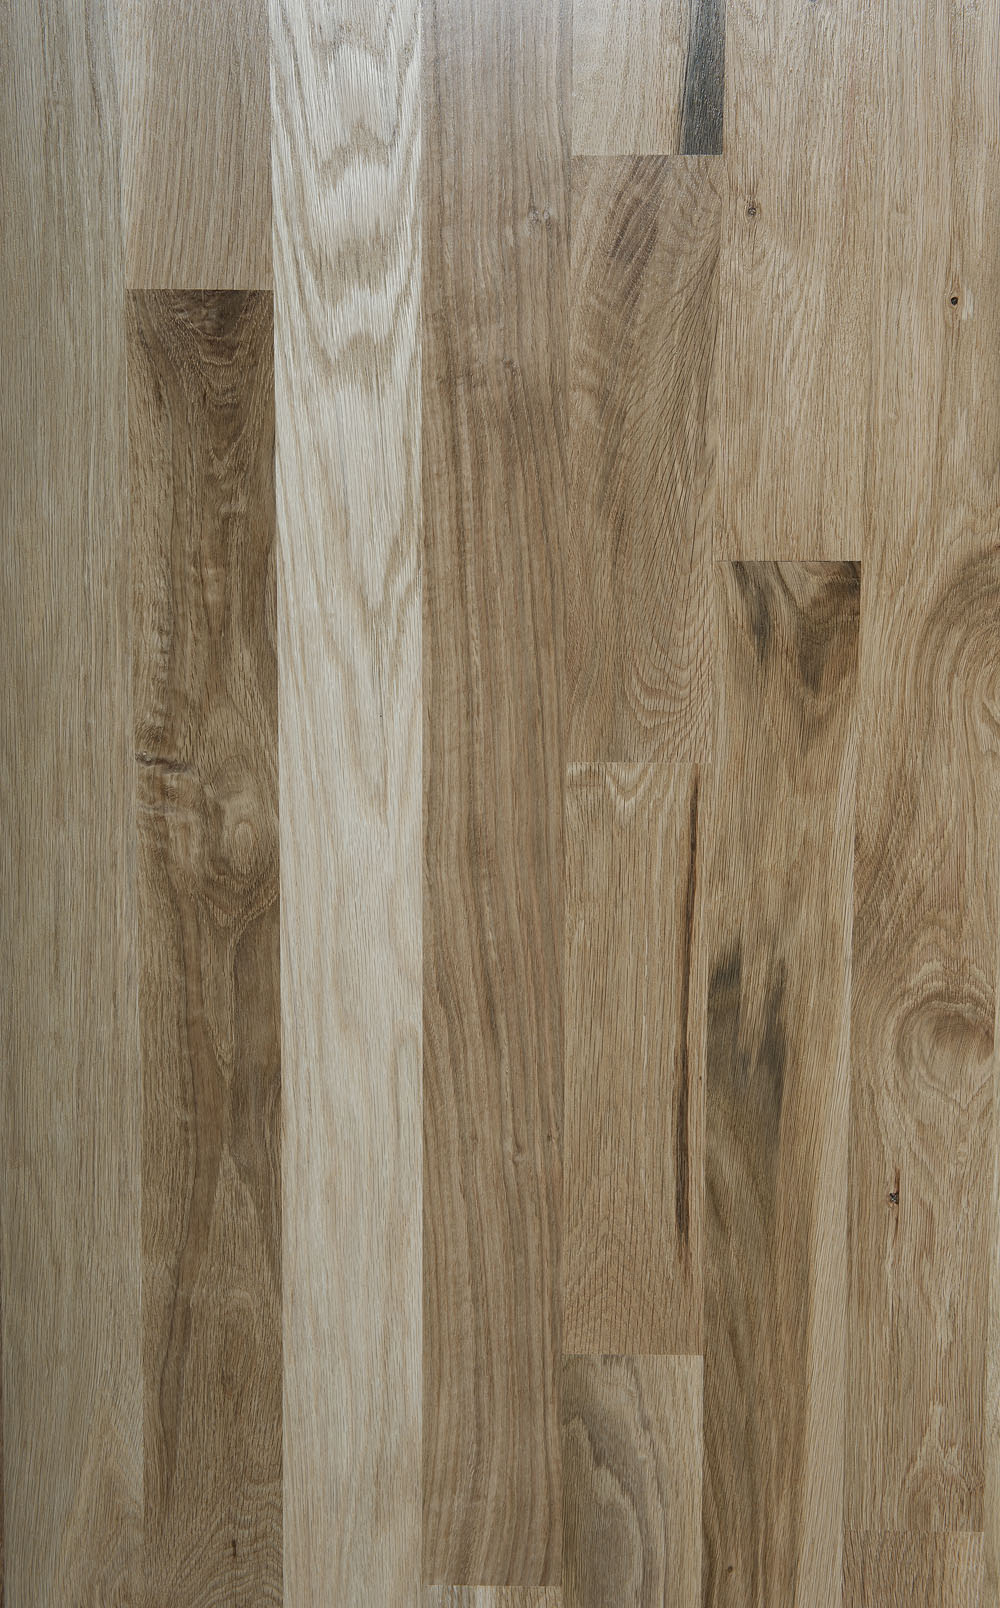 Unfinished White Oak — Boardwalk Hardwood Floors